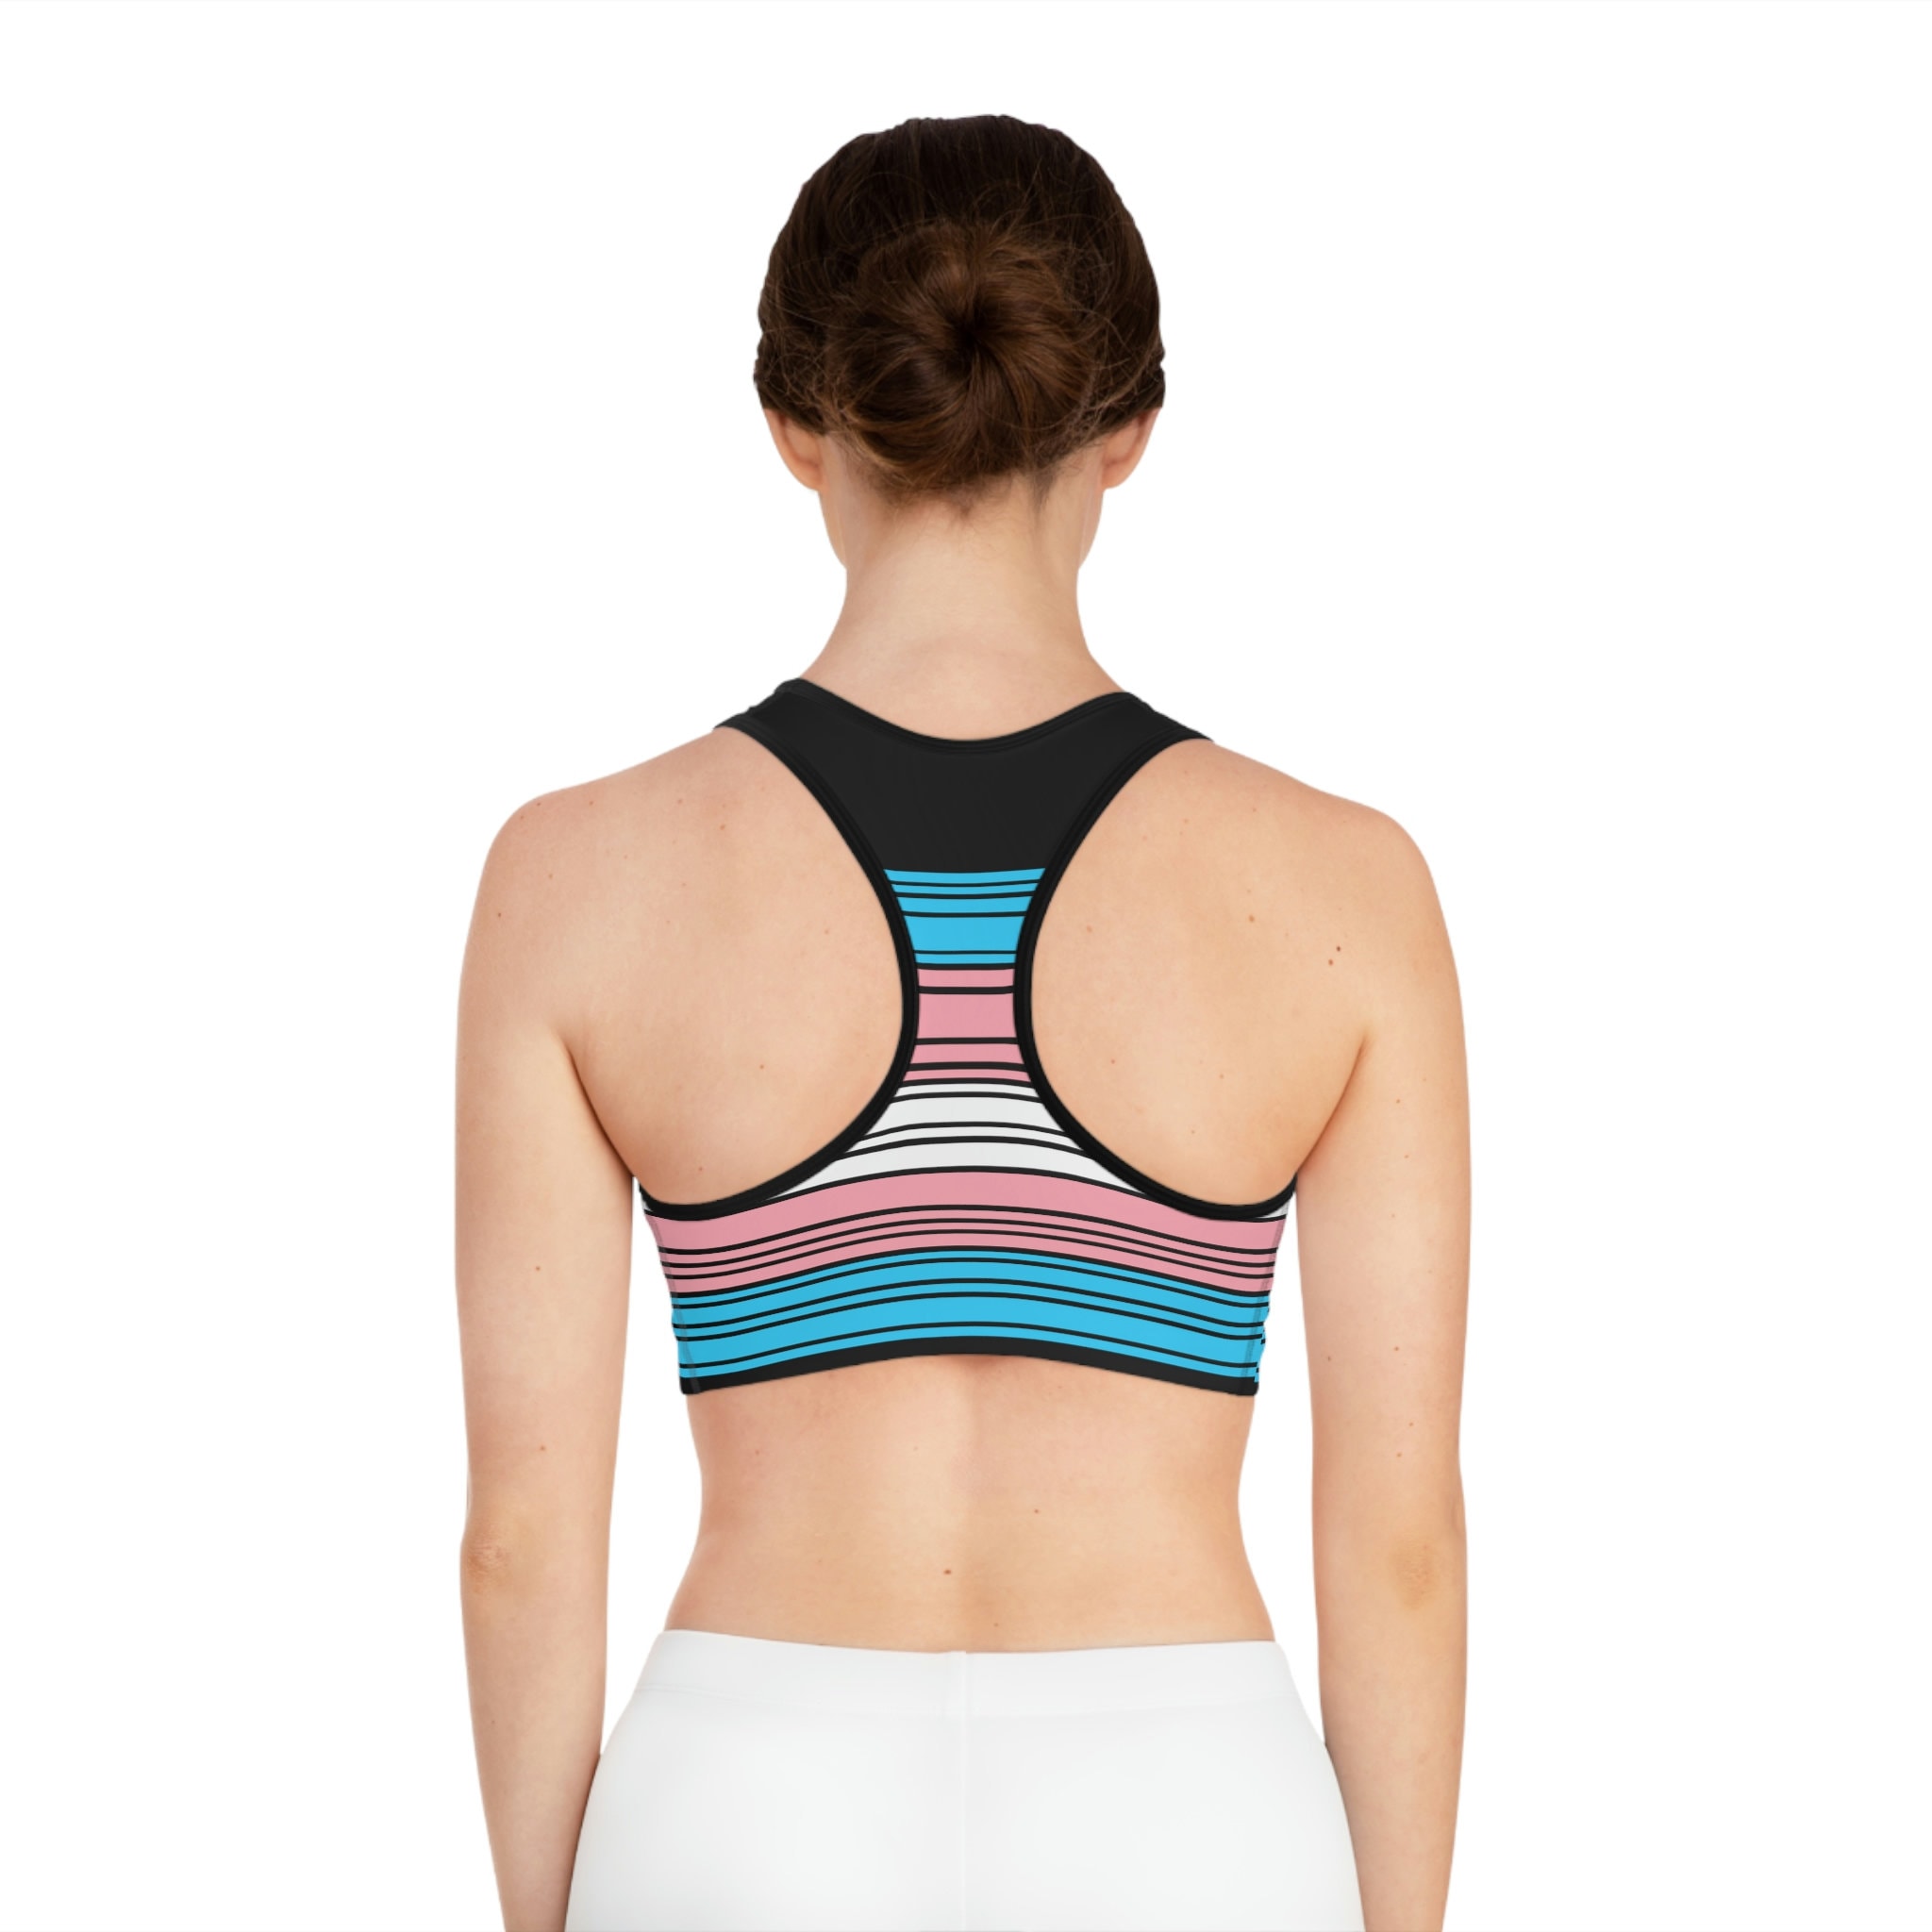 Transgender MTF sports bra; Subtle trans workout top sold by Nambcvt, SKU  868204